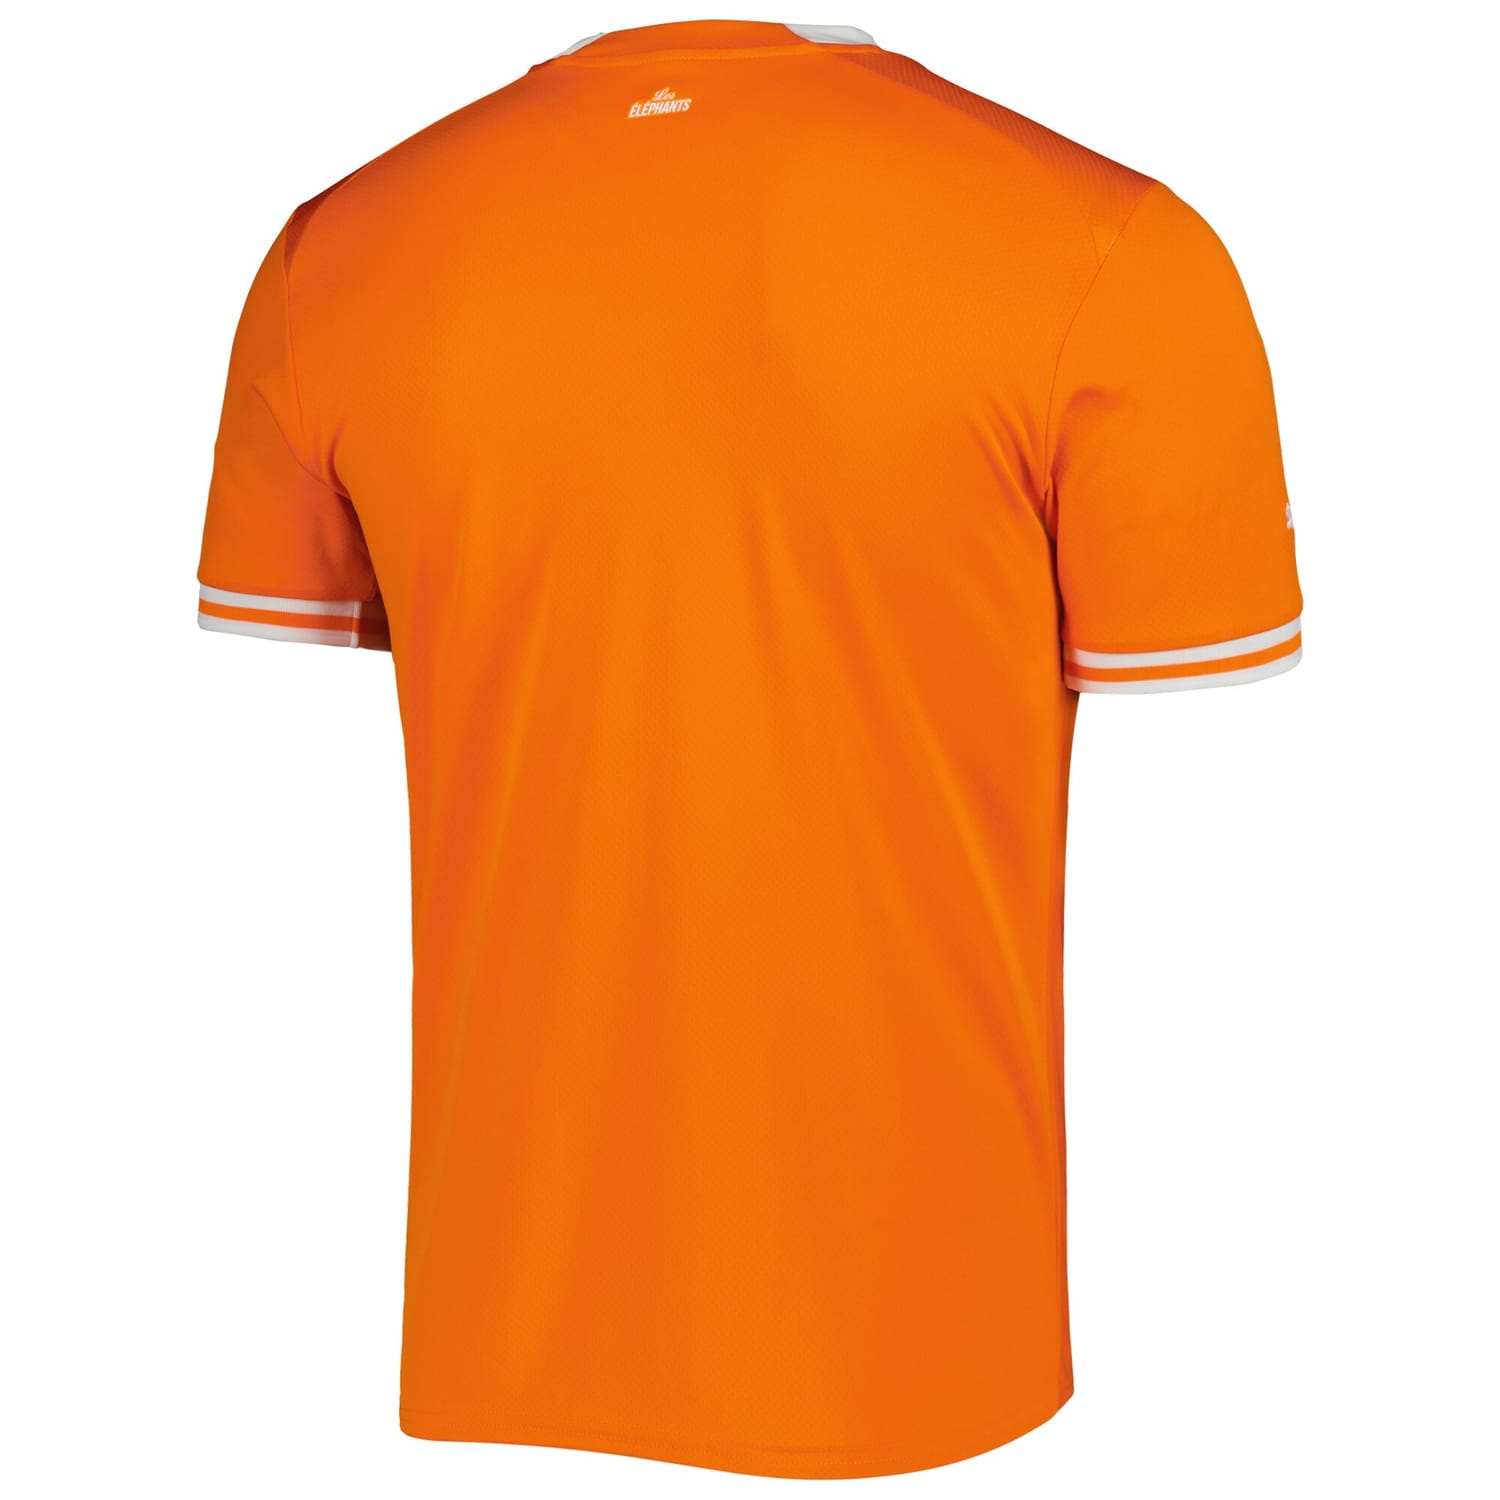 Ivory Coast National Team Home Jersey Shirt Orange 2022-23 for Men